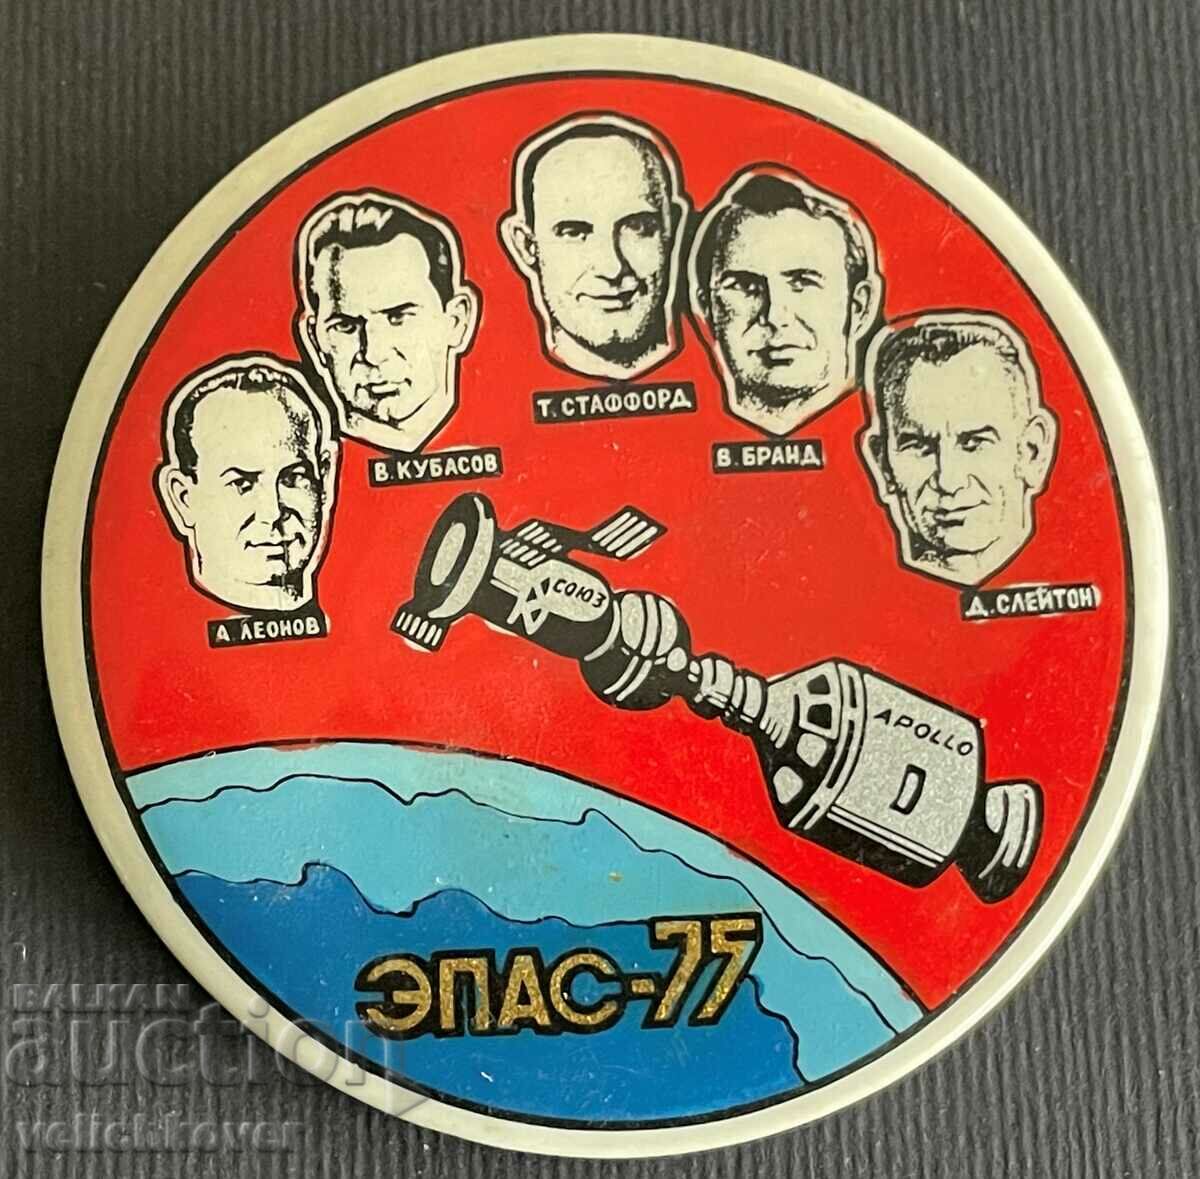 34657 USSR USA space sign program Apollo Union 1975.